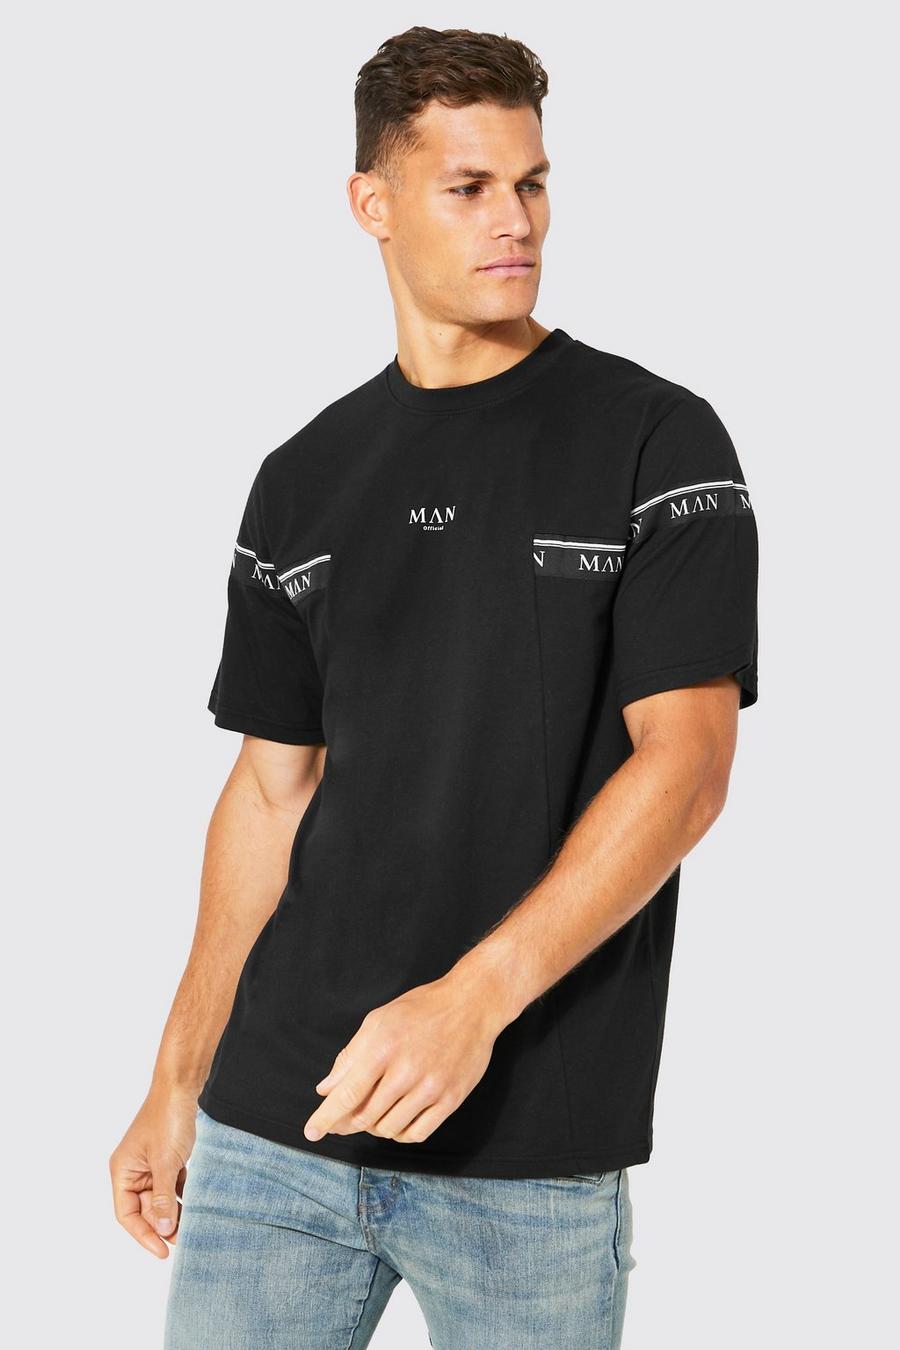 Black nero Tall Roman Man T-shirt With Tape